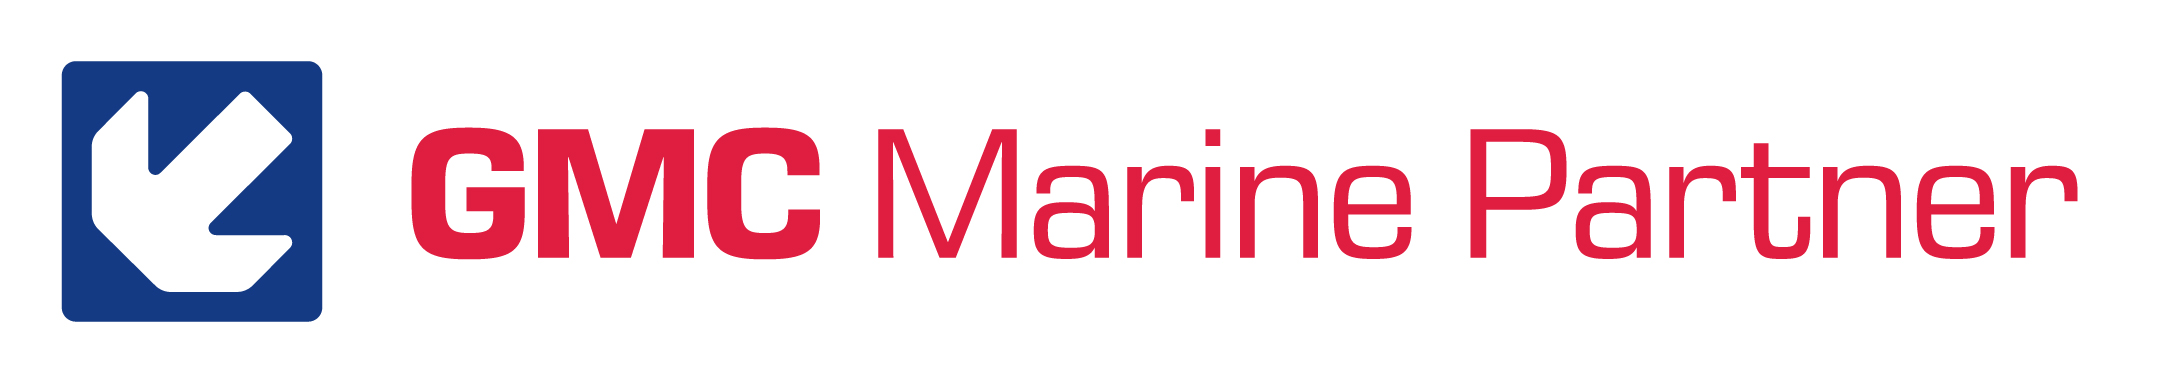 GMC Marine Partner AS logo